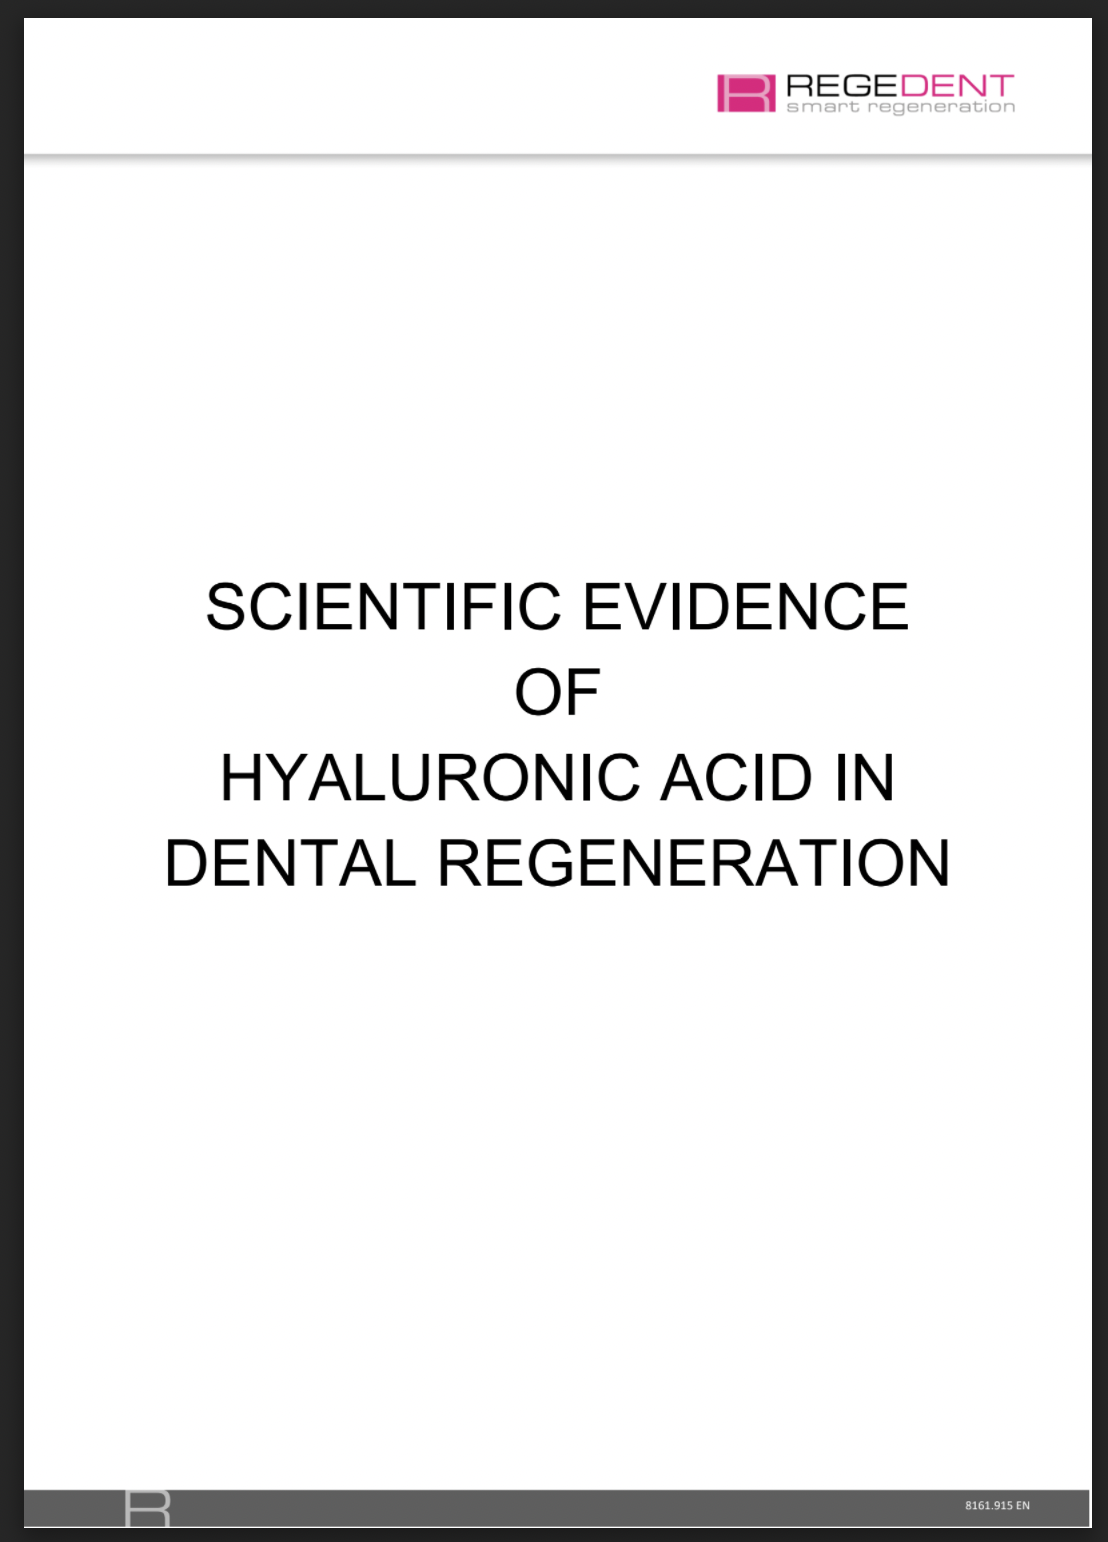 SCIENTIFIC EVIDENCE OF HYALURONIC ACID IN DENTAL REGENERATION